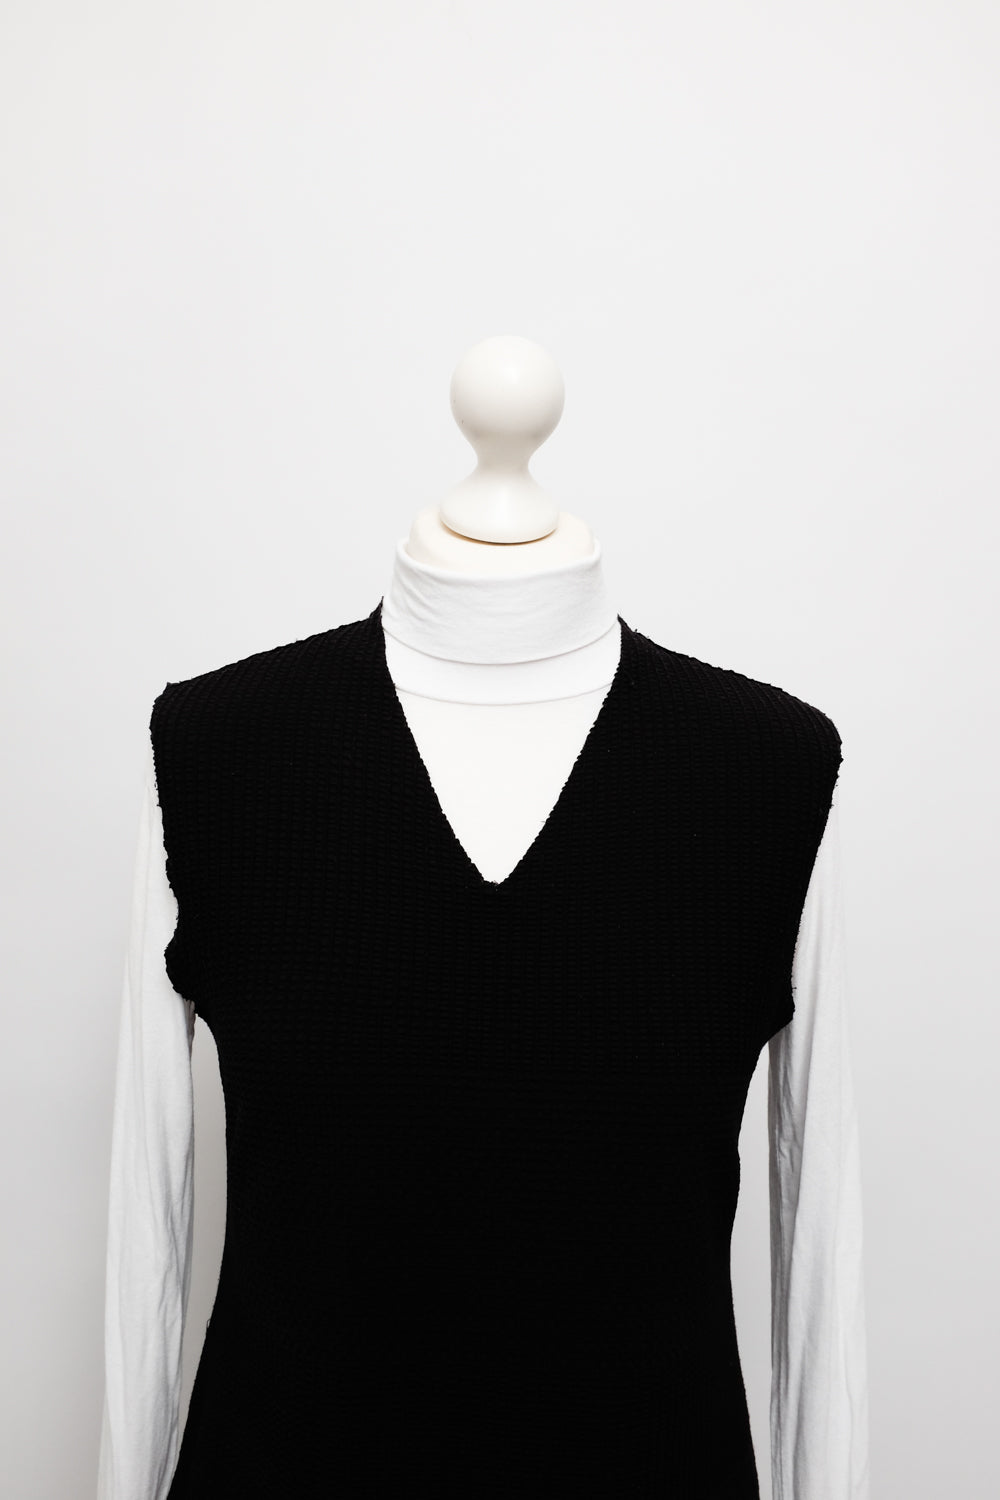 MARITHE FRANCOIS GIRBAUD BLACK ITALY DRESS